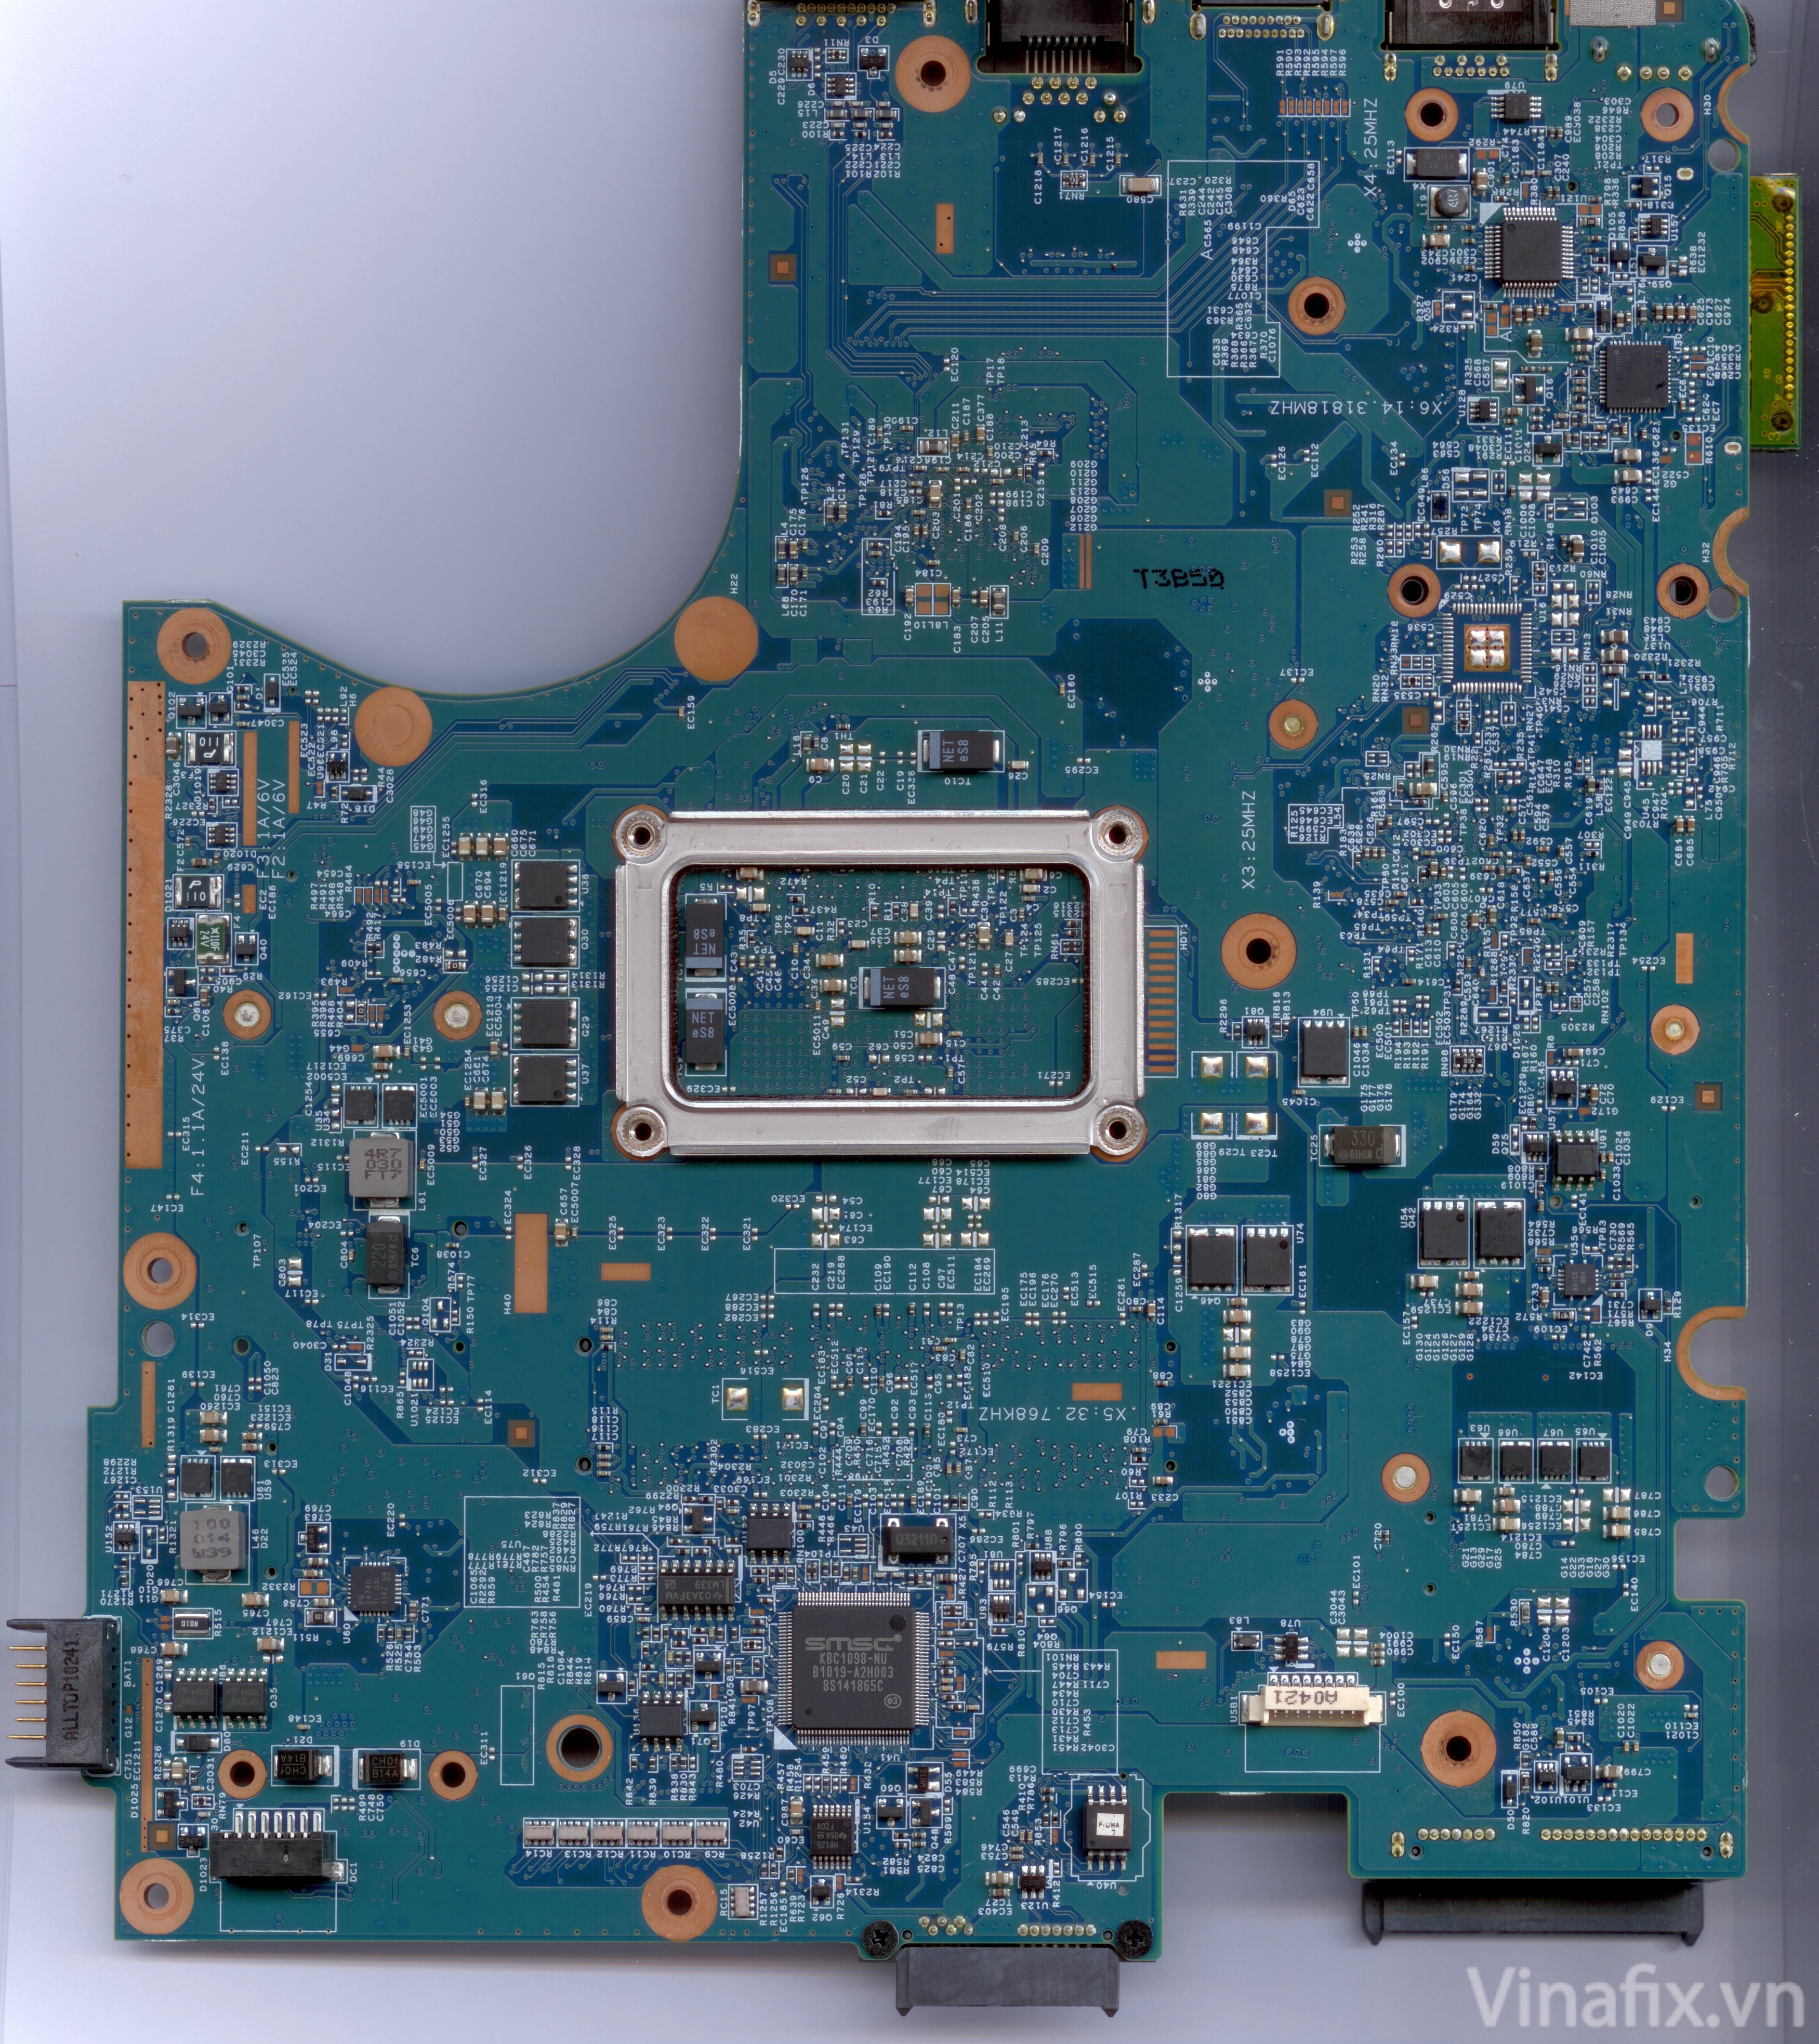 HP ProBook 4525s PATEK UMA MB 09287-1.48.4GJ02.011